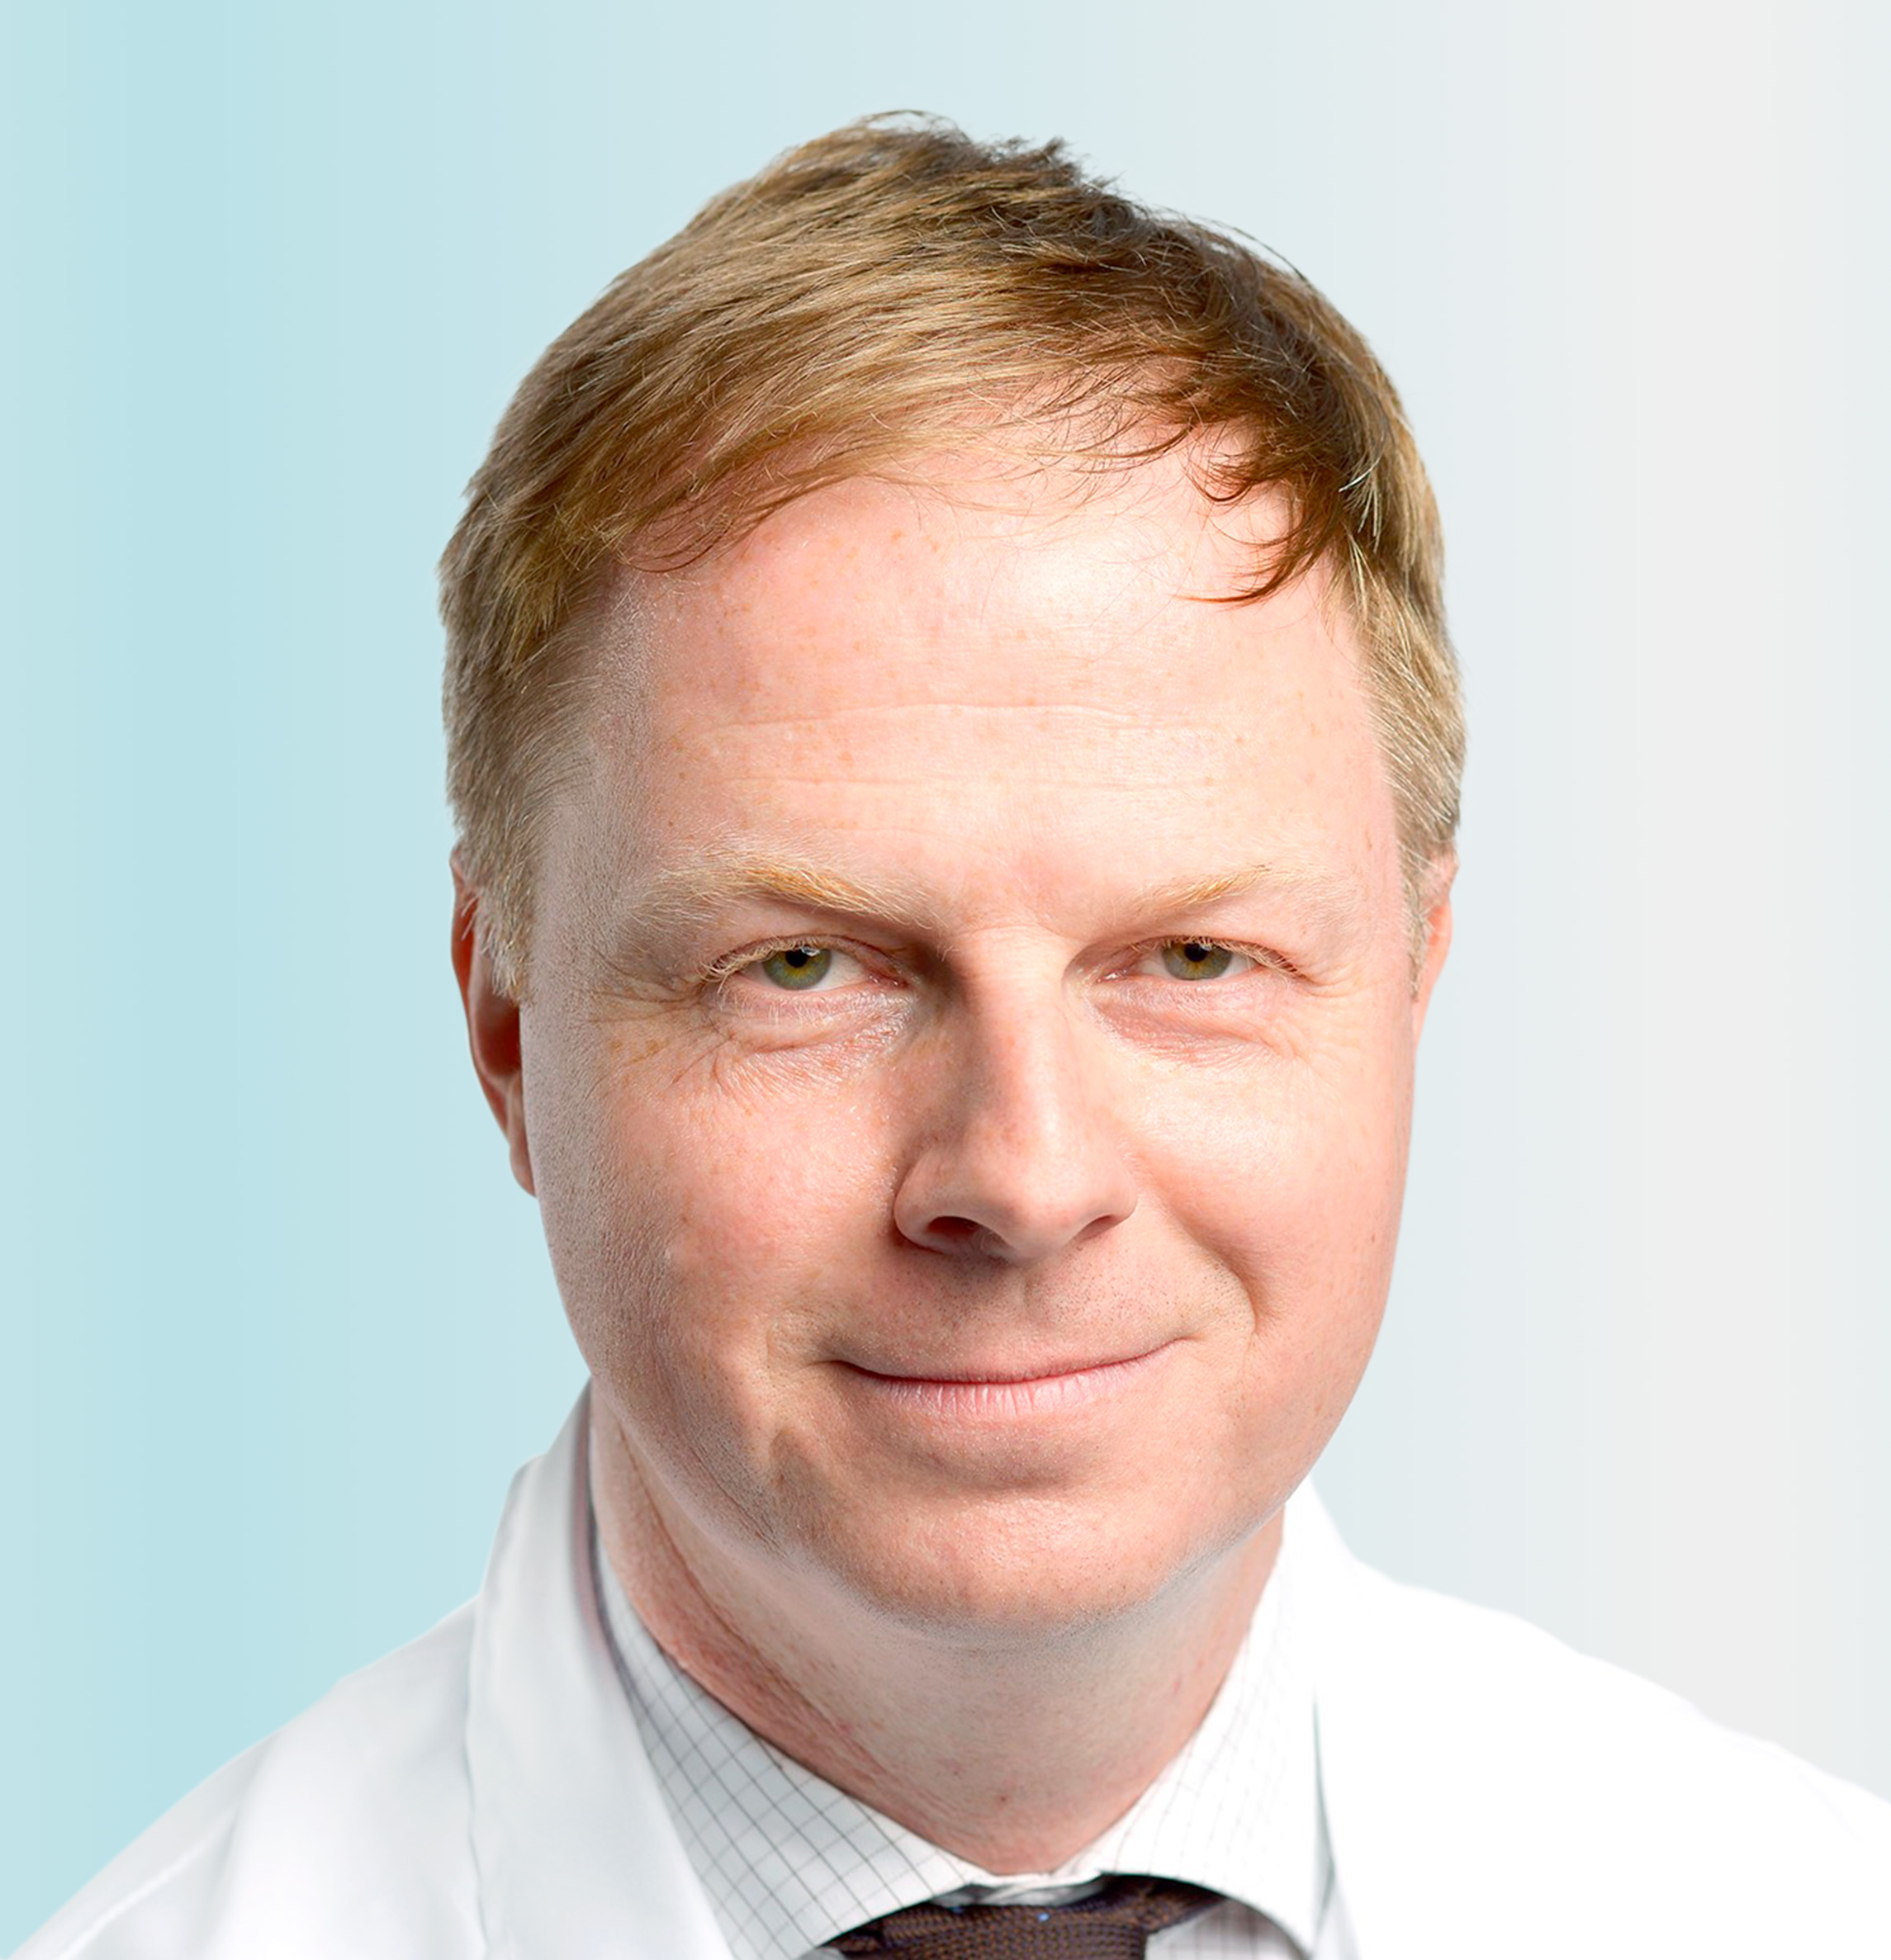 Dermatologist, Dr. med. Siegfried Borelli